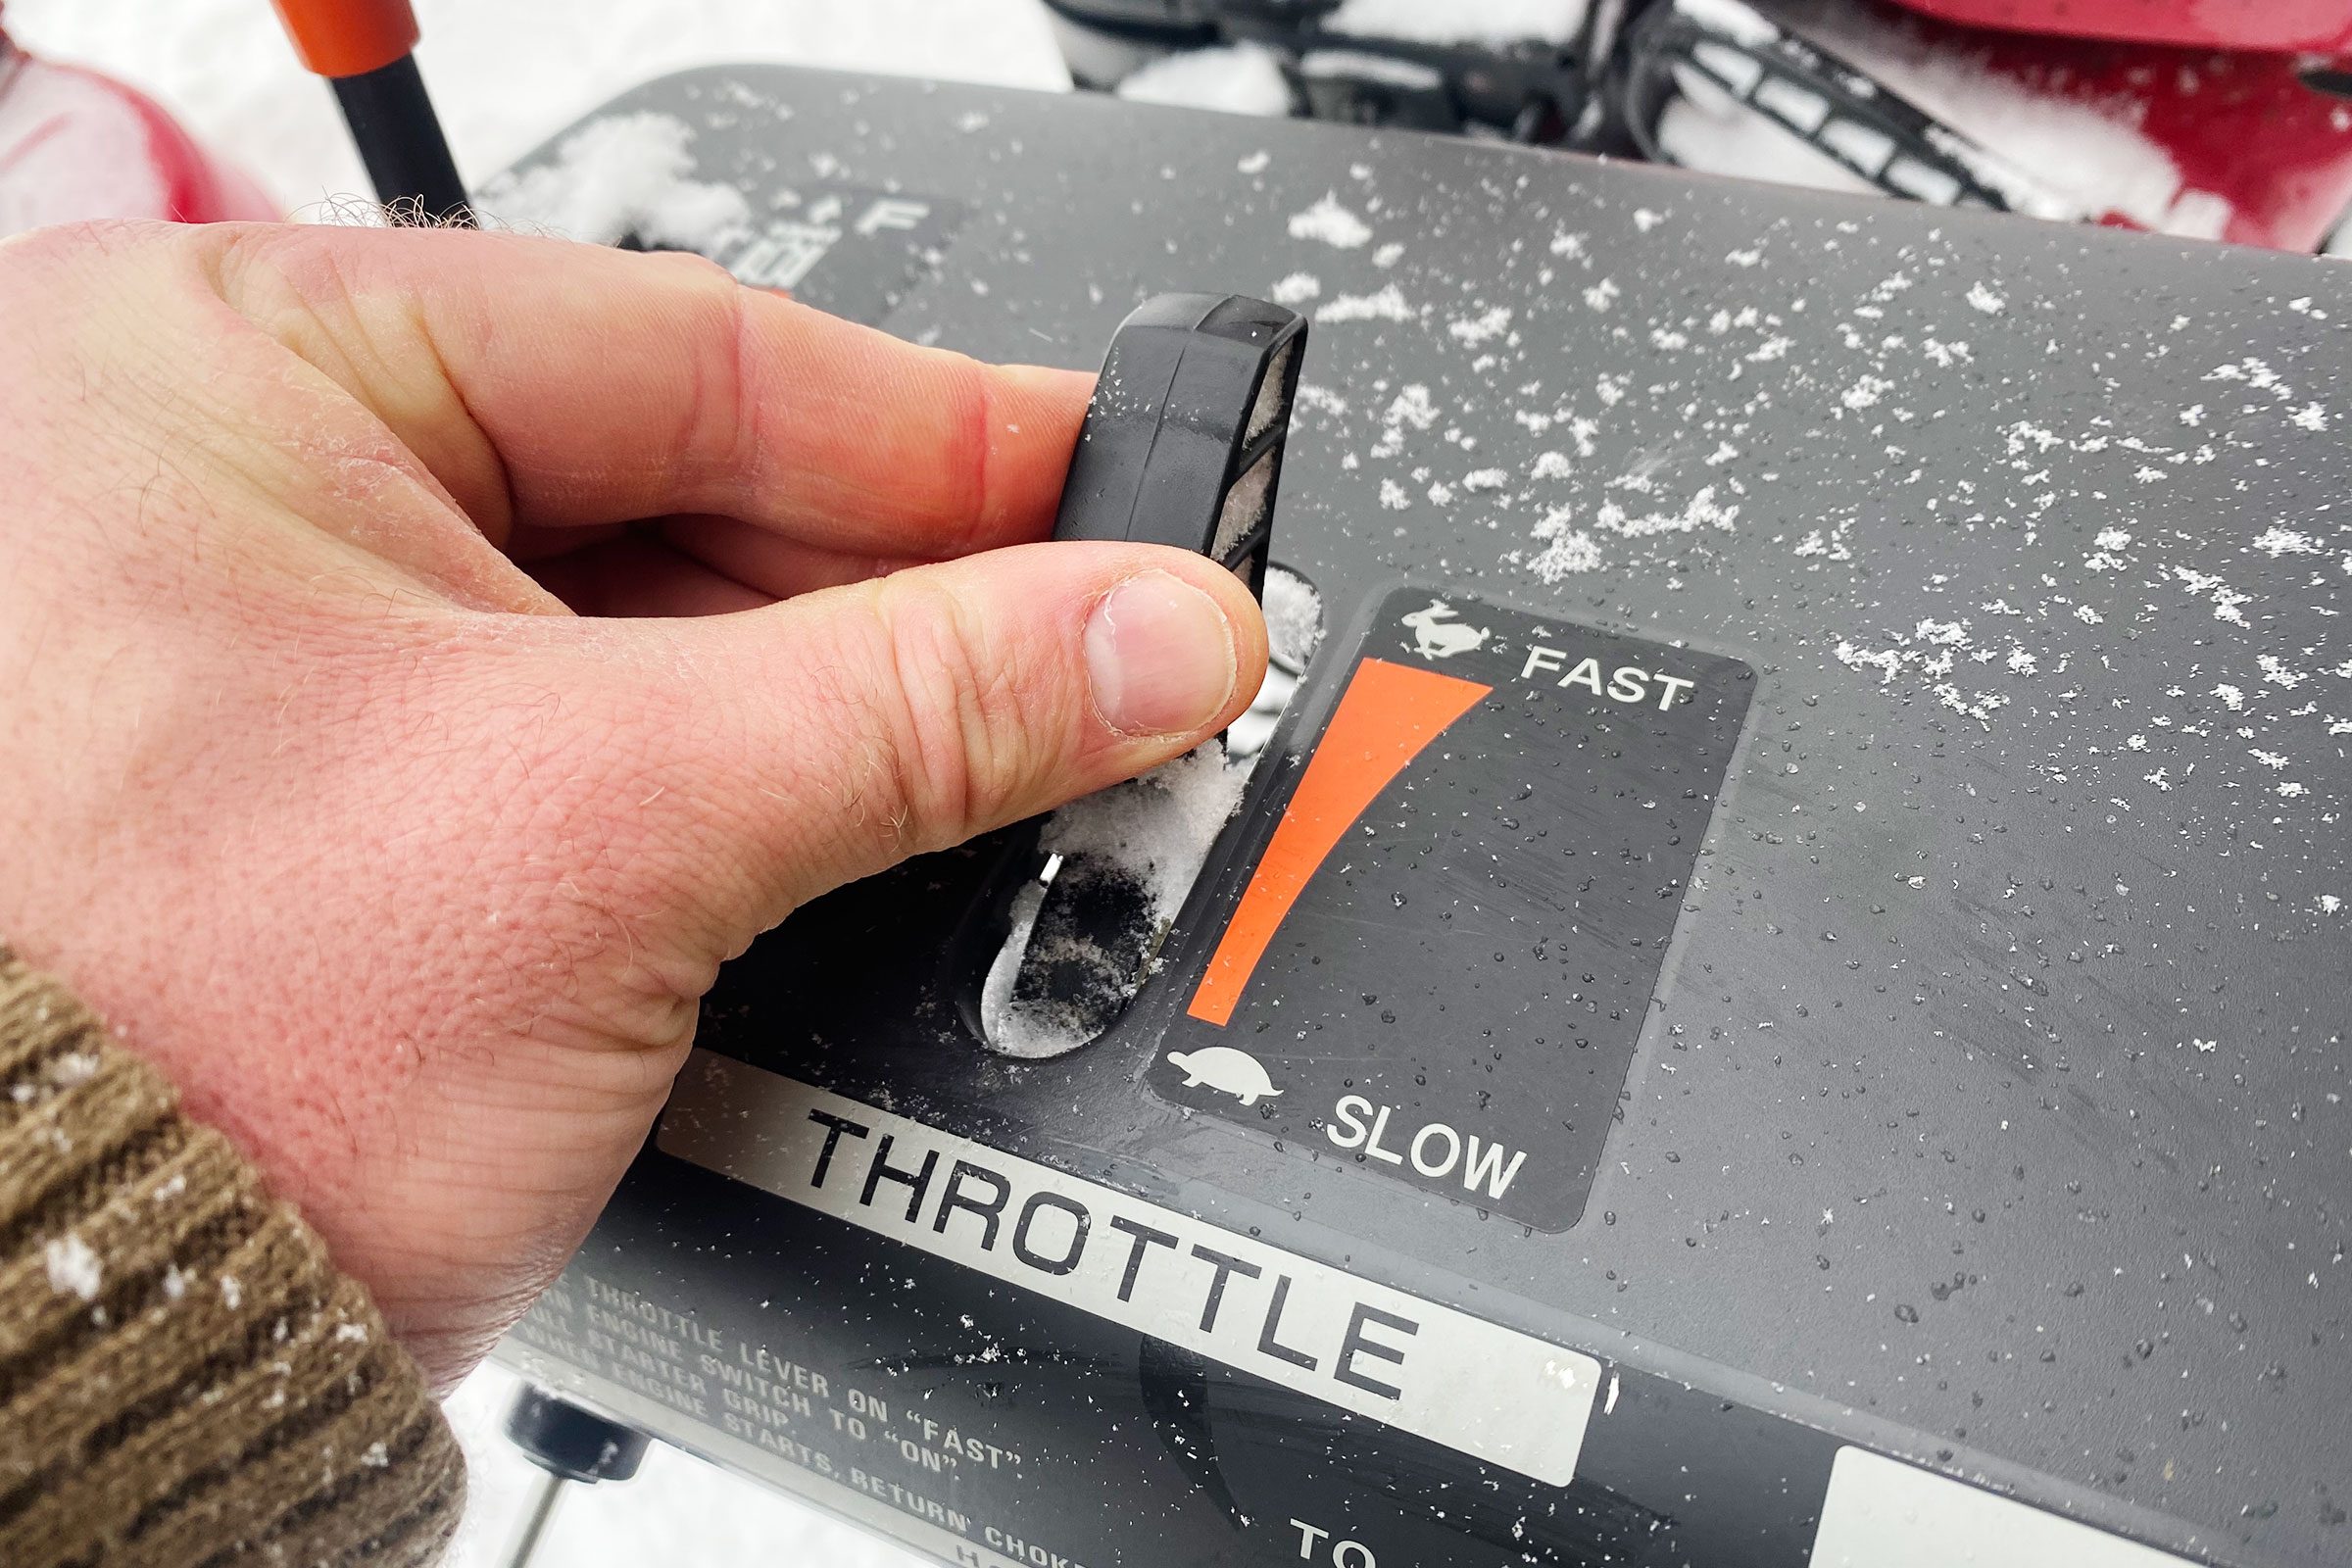 Adjust Throttle on snow blower